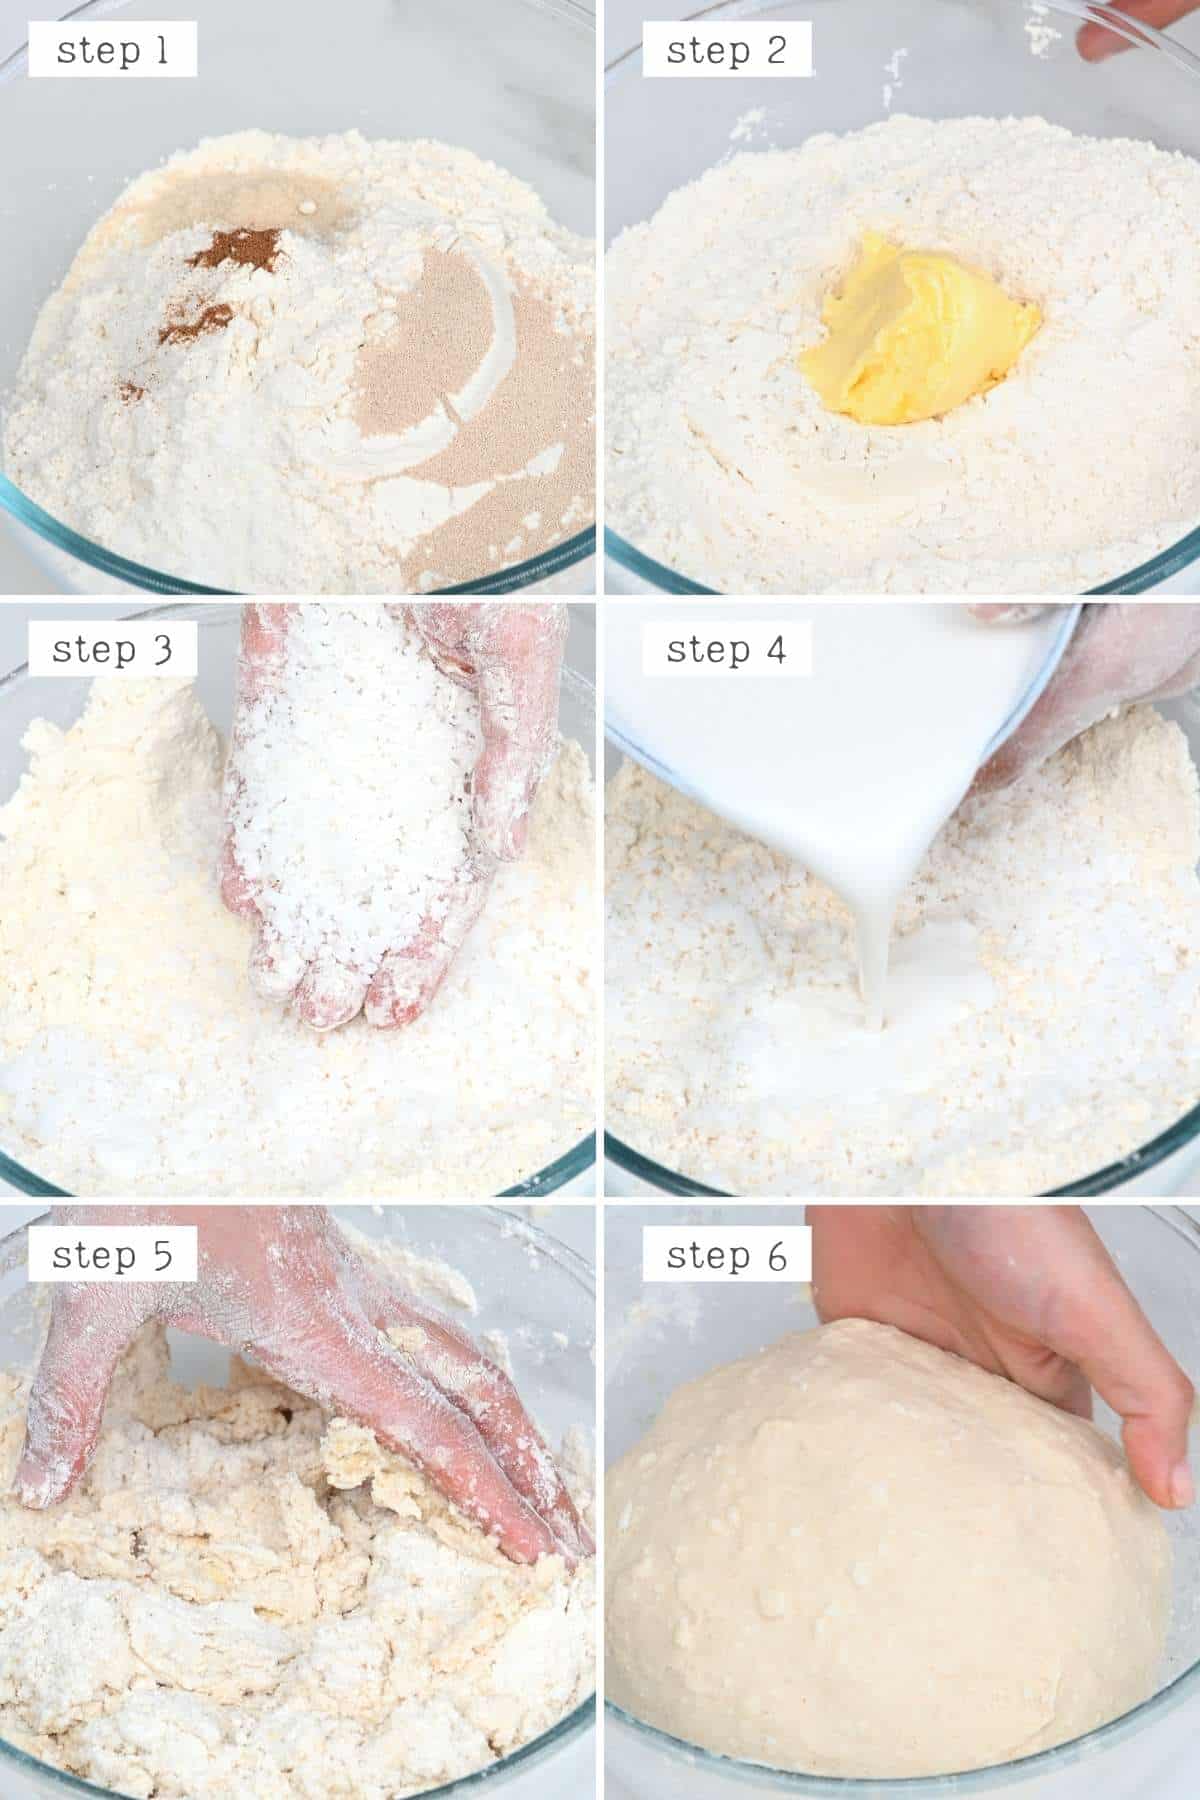 Preparation steps for coconut bake dough